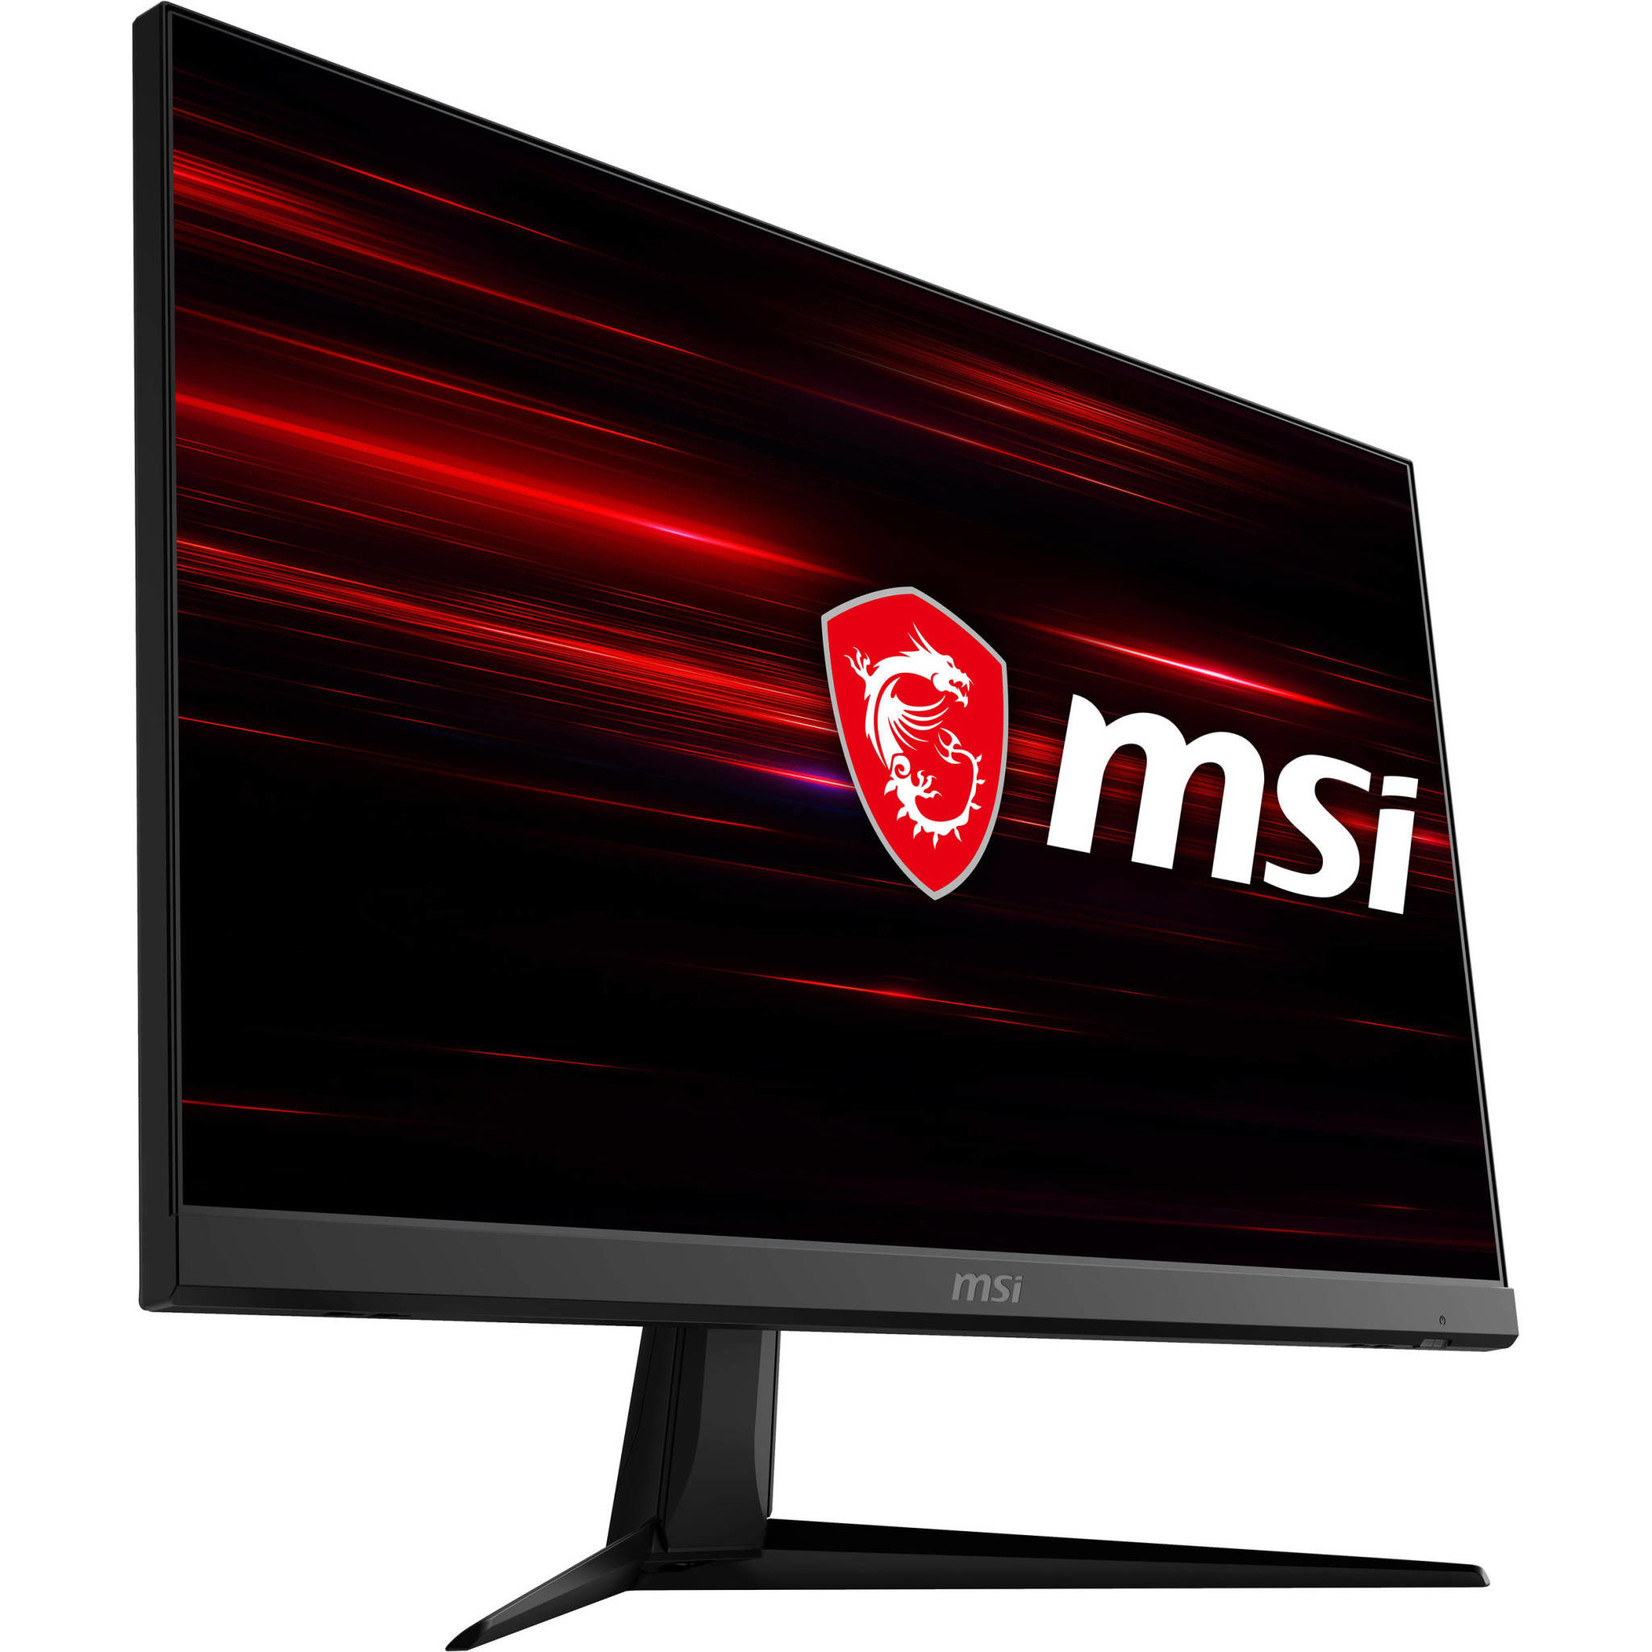 MSI 27" MSI Optix G271 IPS Flat Gaming 144MHz Monitor